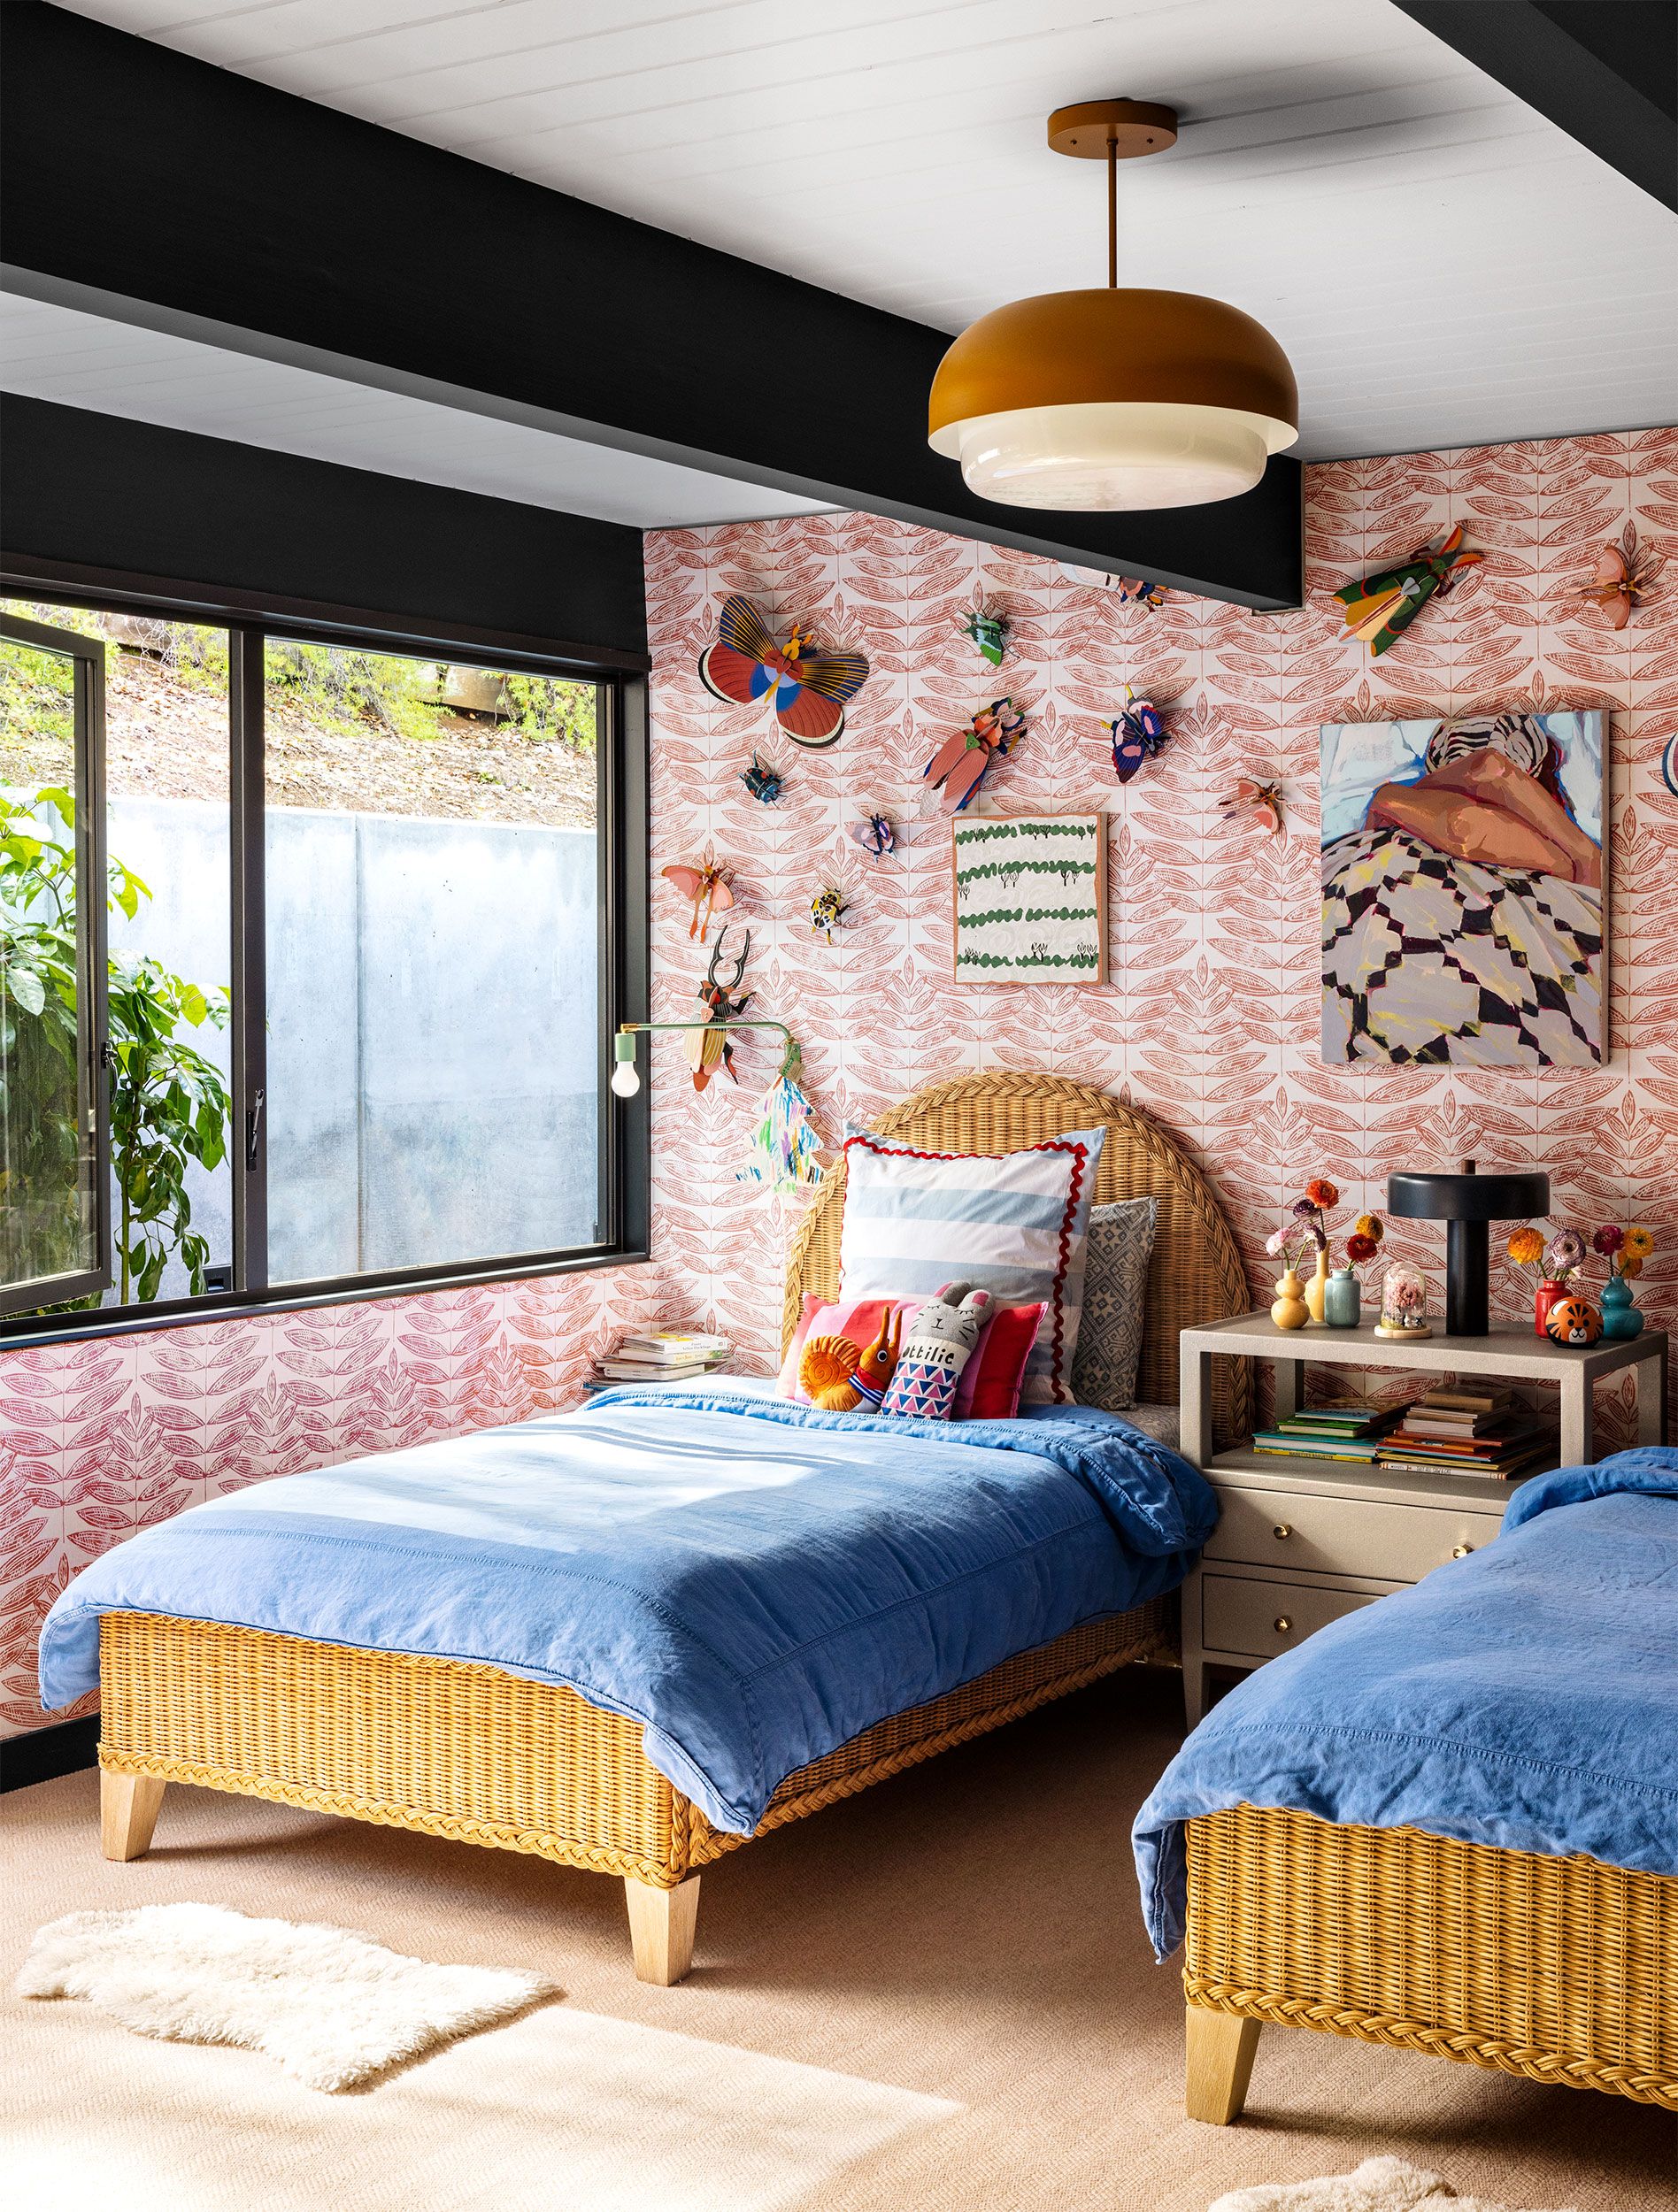 10 Kids Room Wall Decor Ideas That Parents Won't Hate